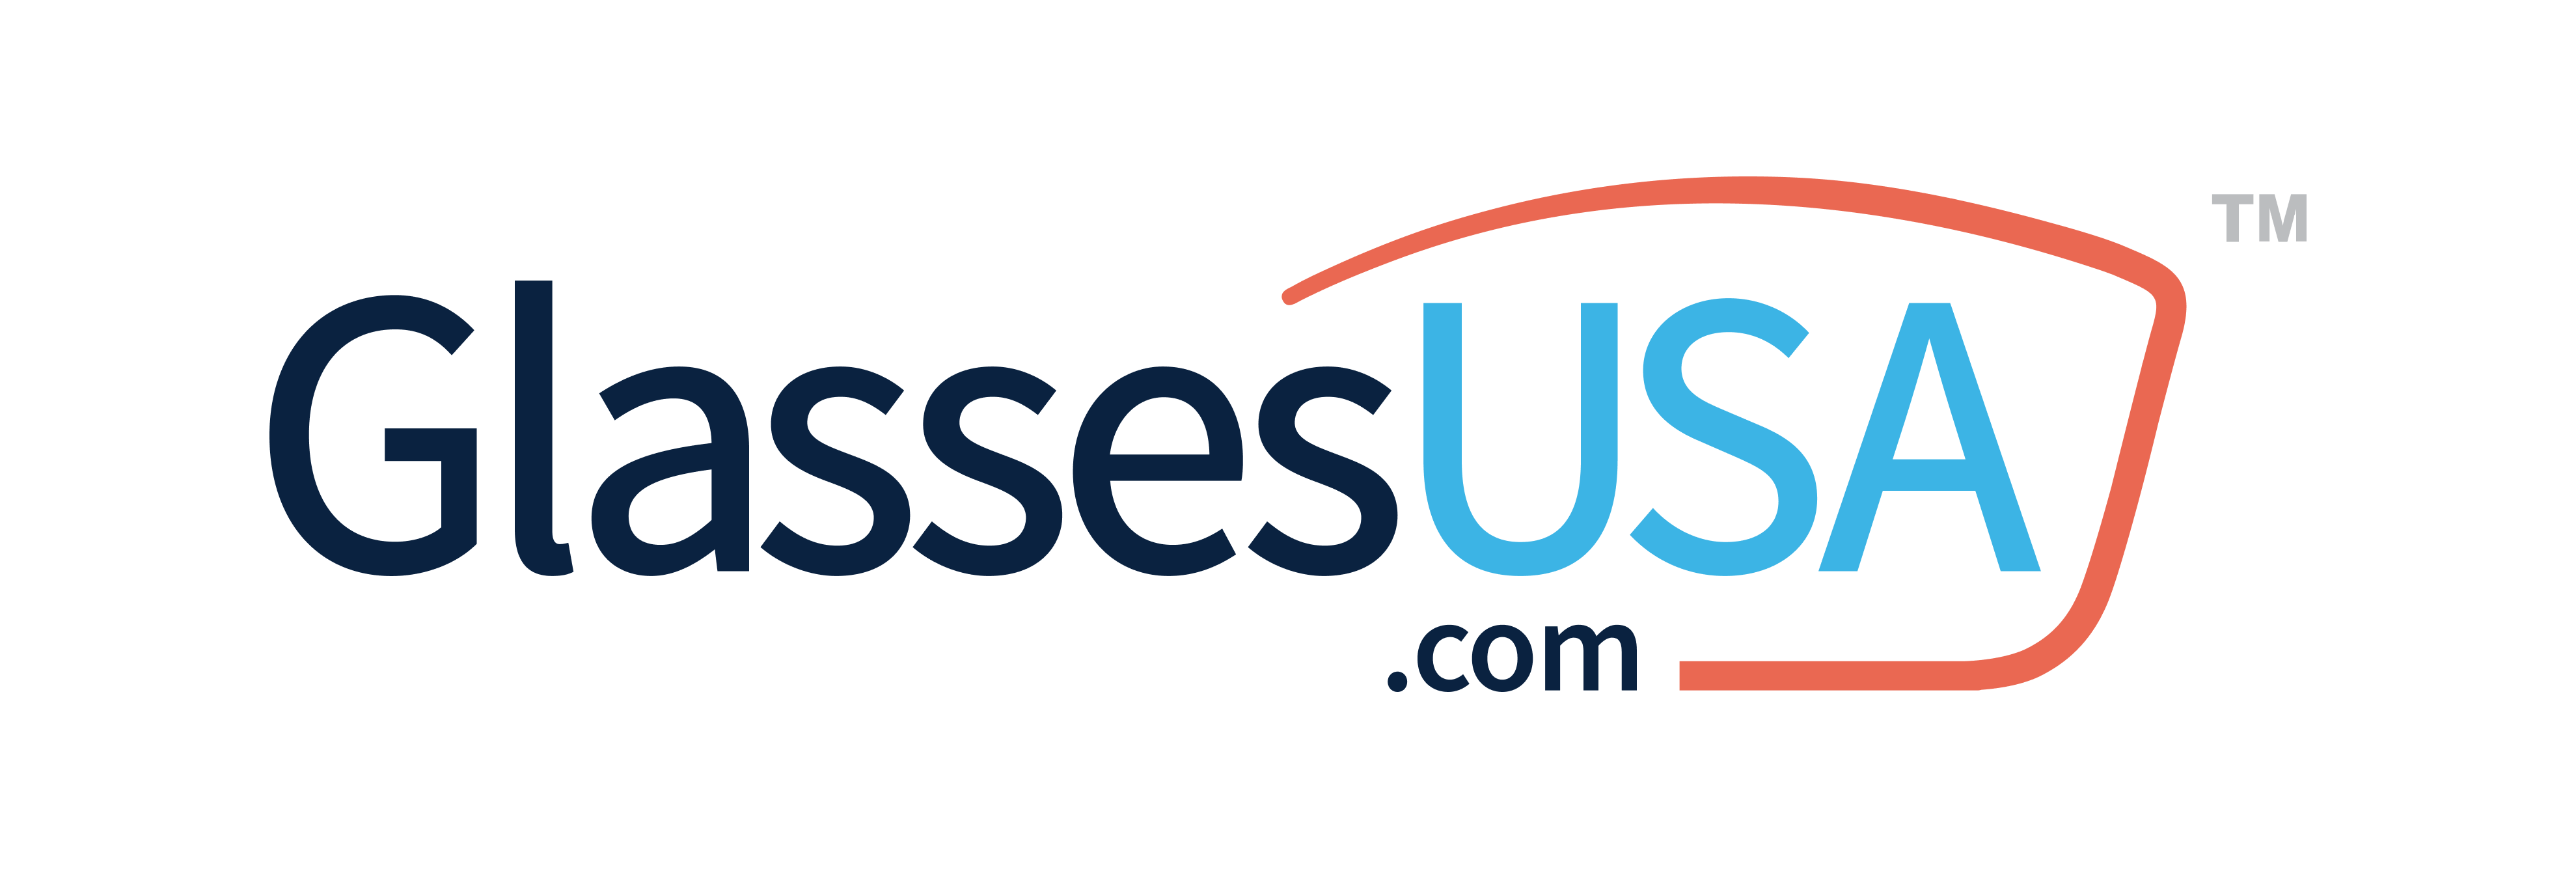 glassesusa_logo (1) (5)